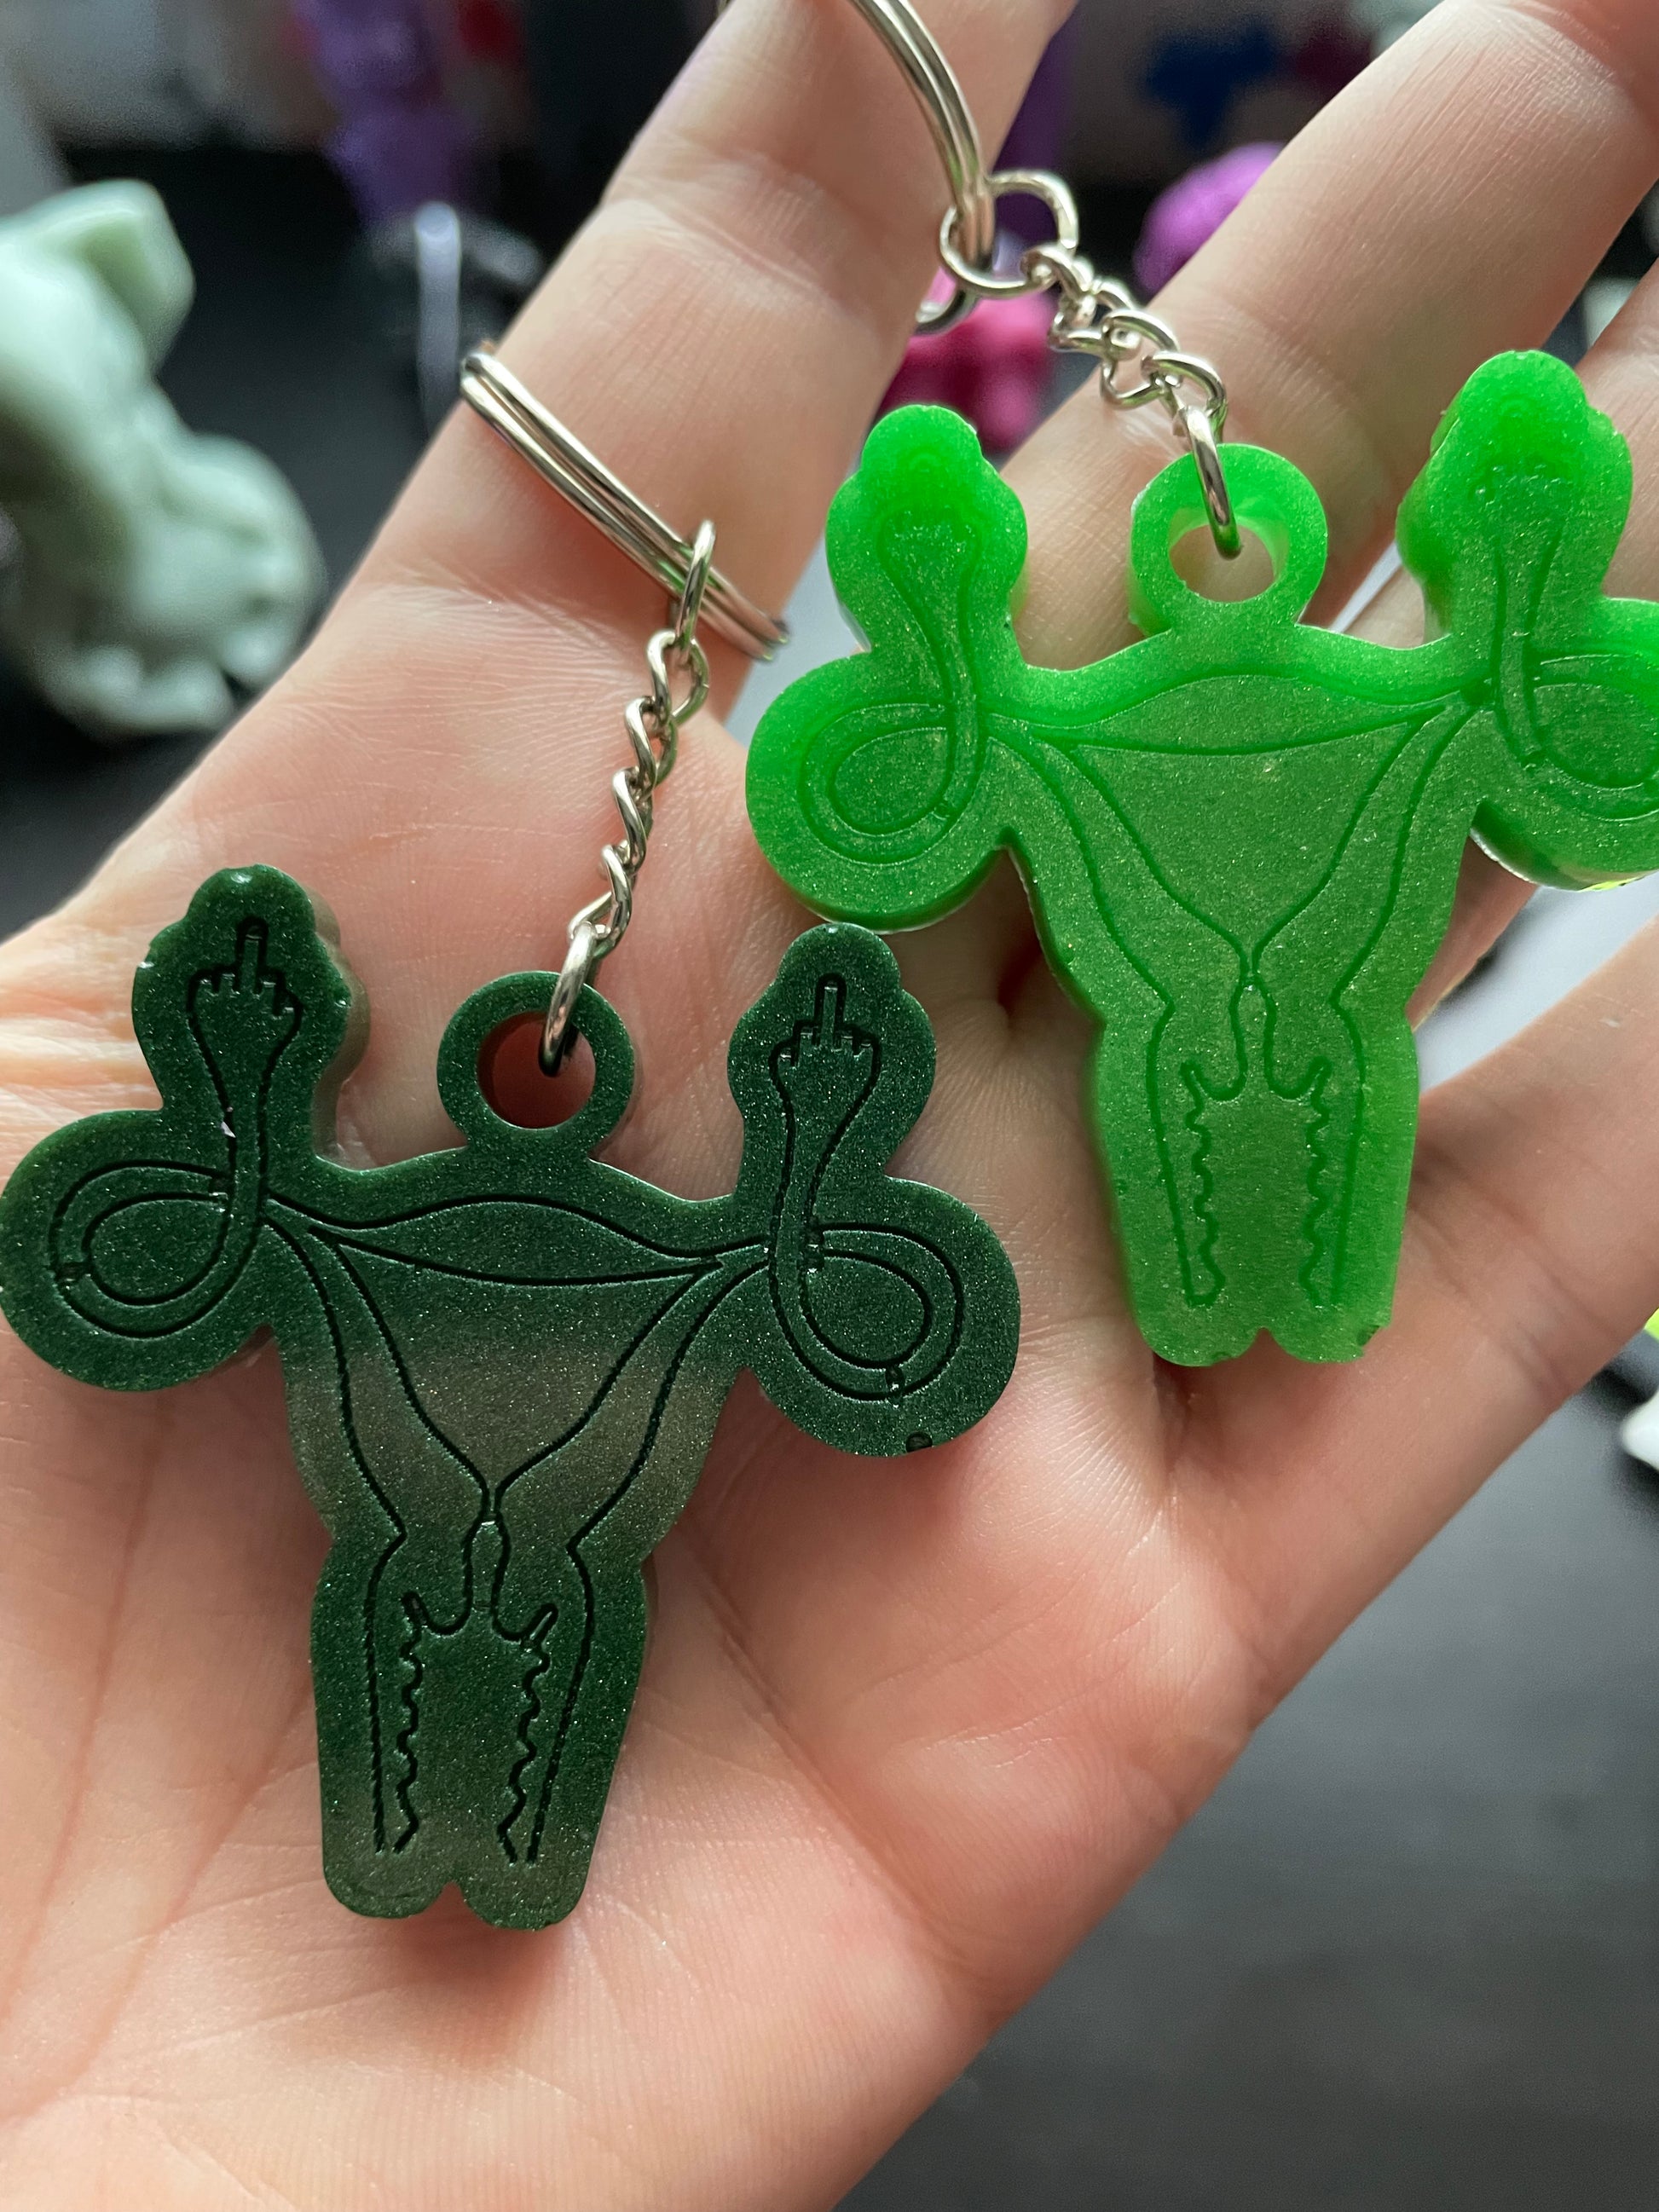 Hunter Green and Green uterus keychains